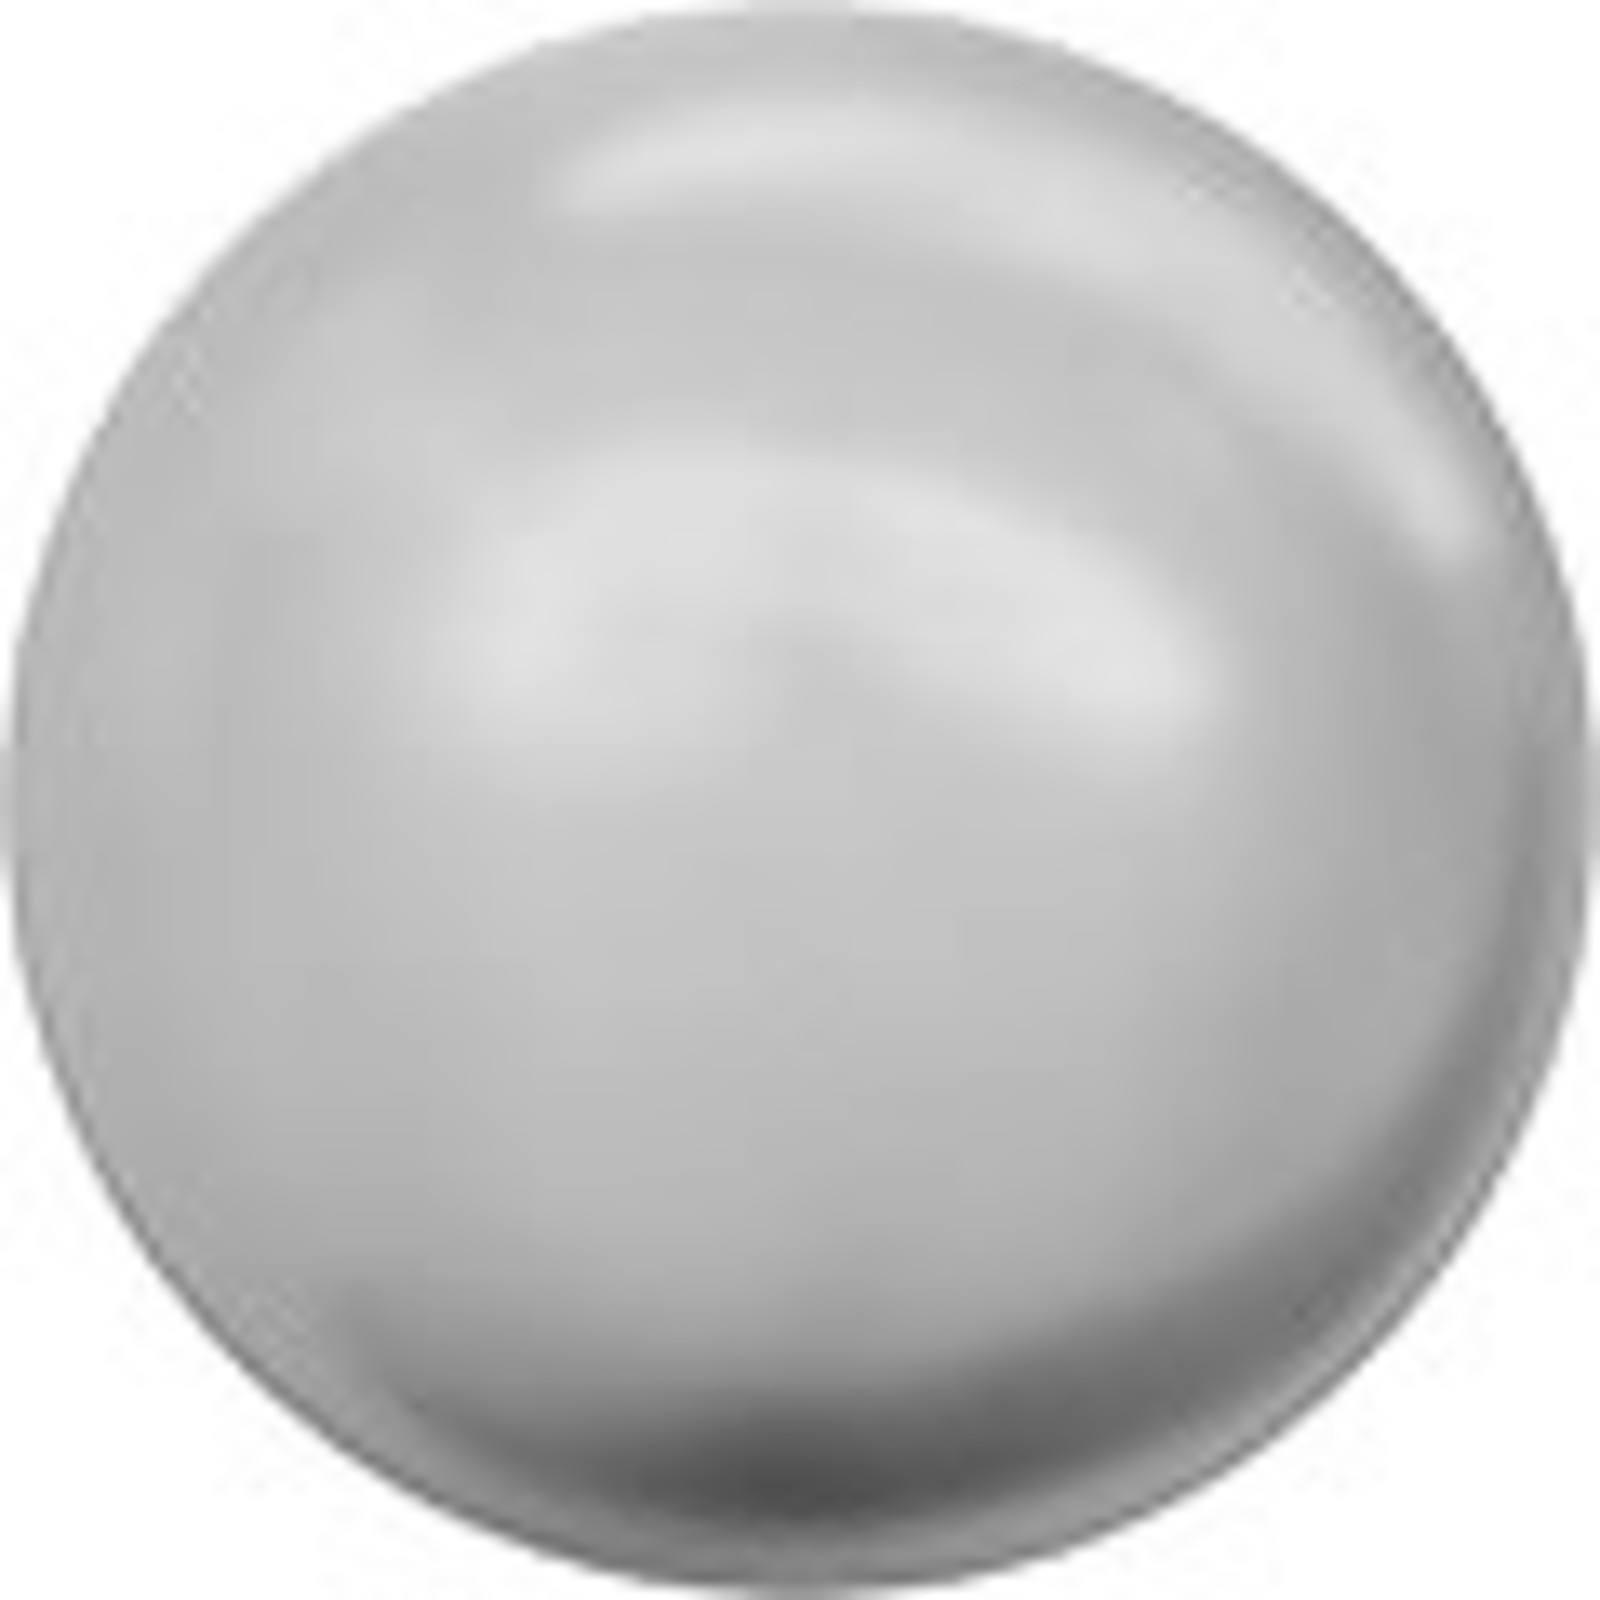 Swarovski Swarovski Light grey pearl